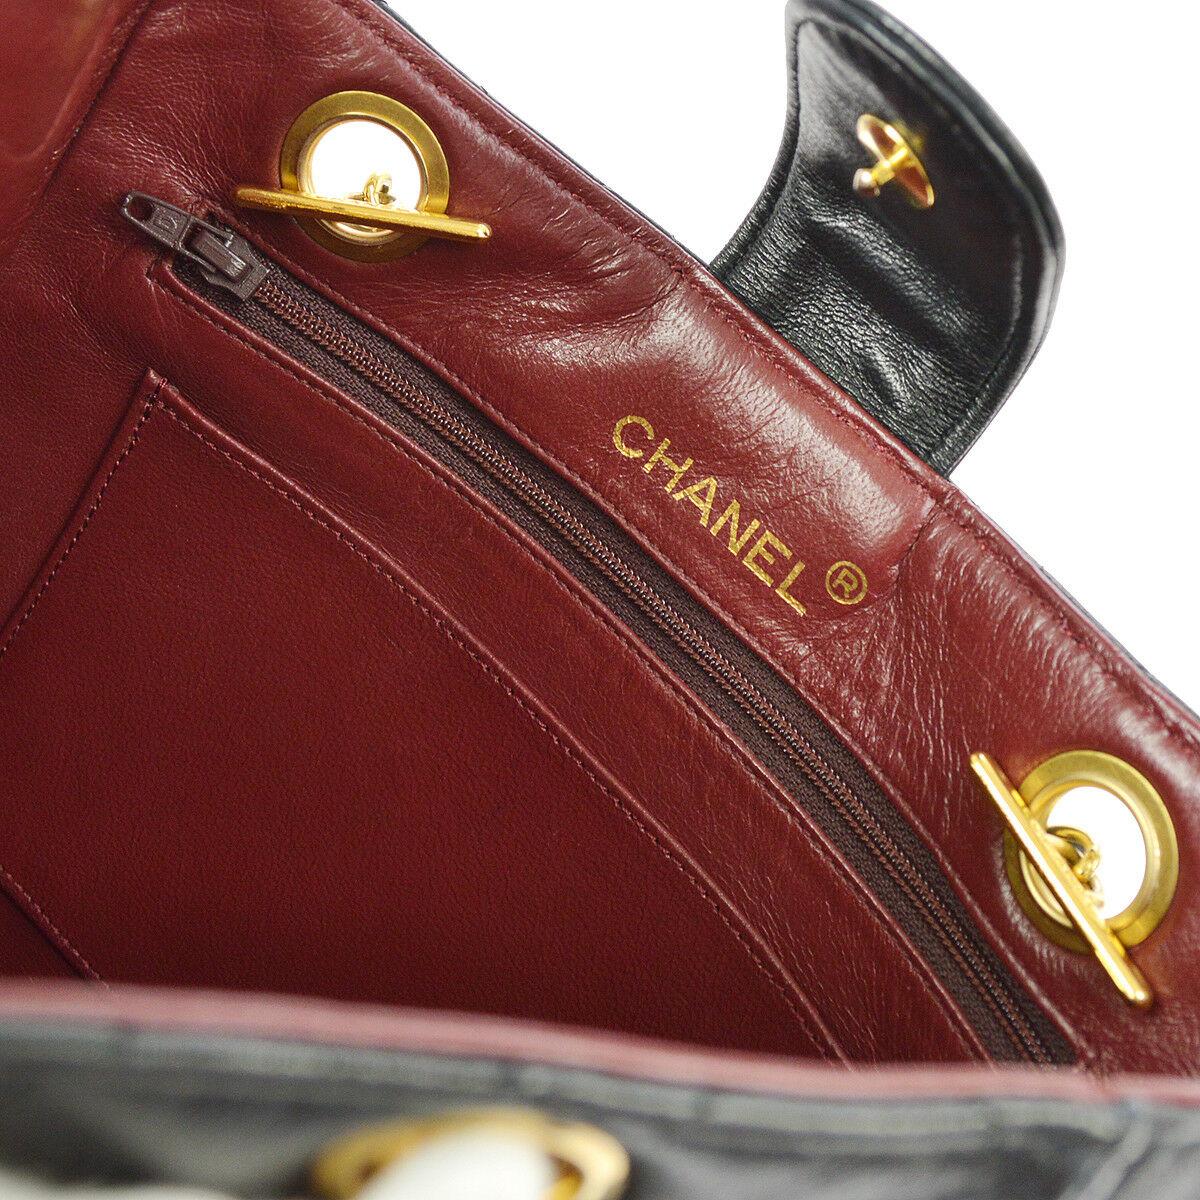 Chanel Black Leather Gold Small Carryall Shoulder Shopper Tote Bag 3